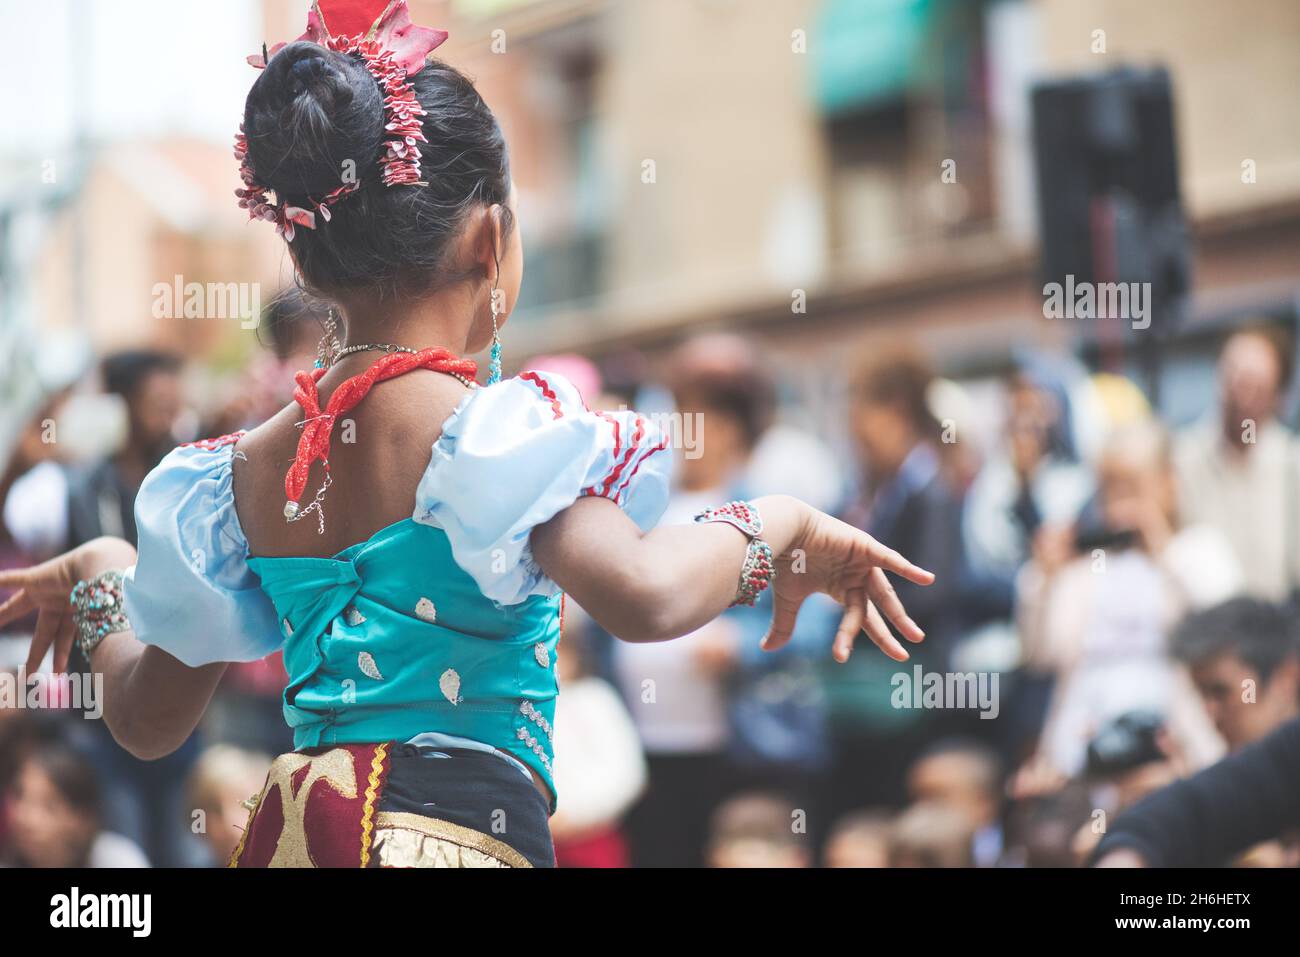 Milan Italy 30 September 201i: Sri Lankan girl during a dance show in the street Stock Photo